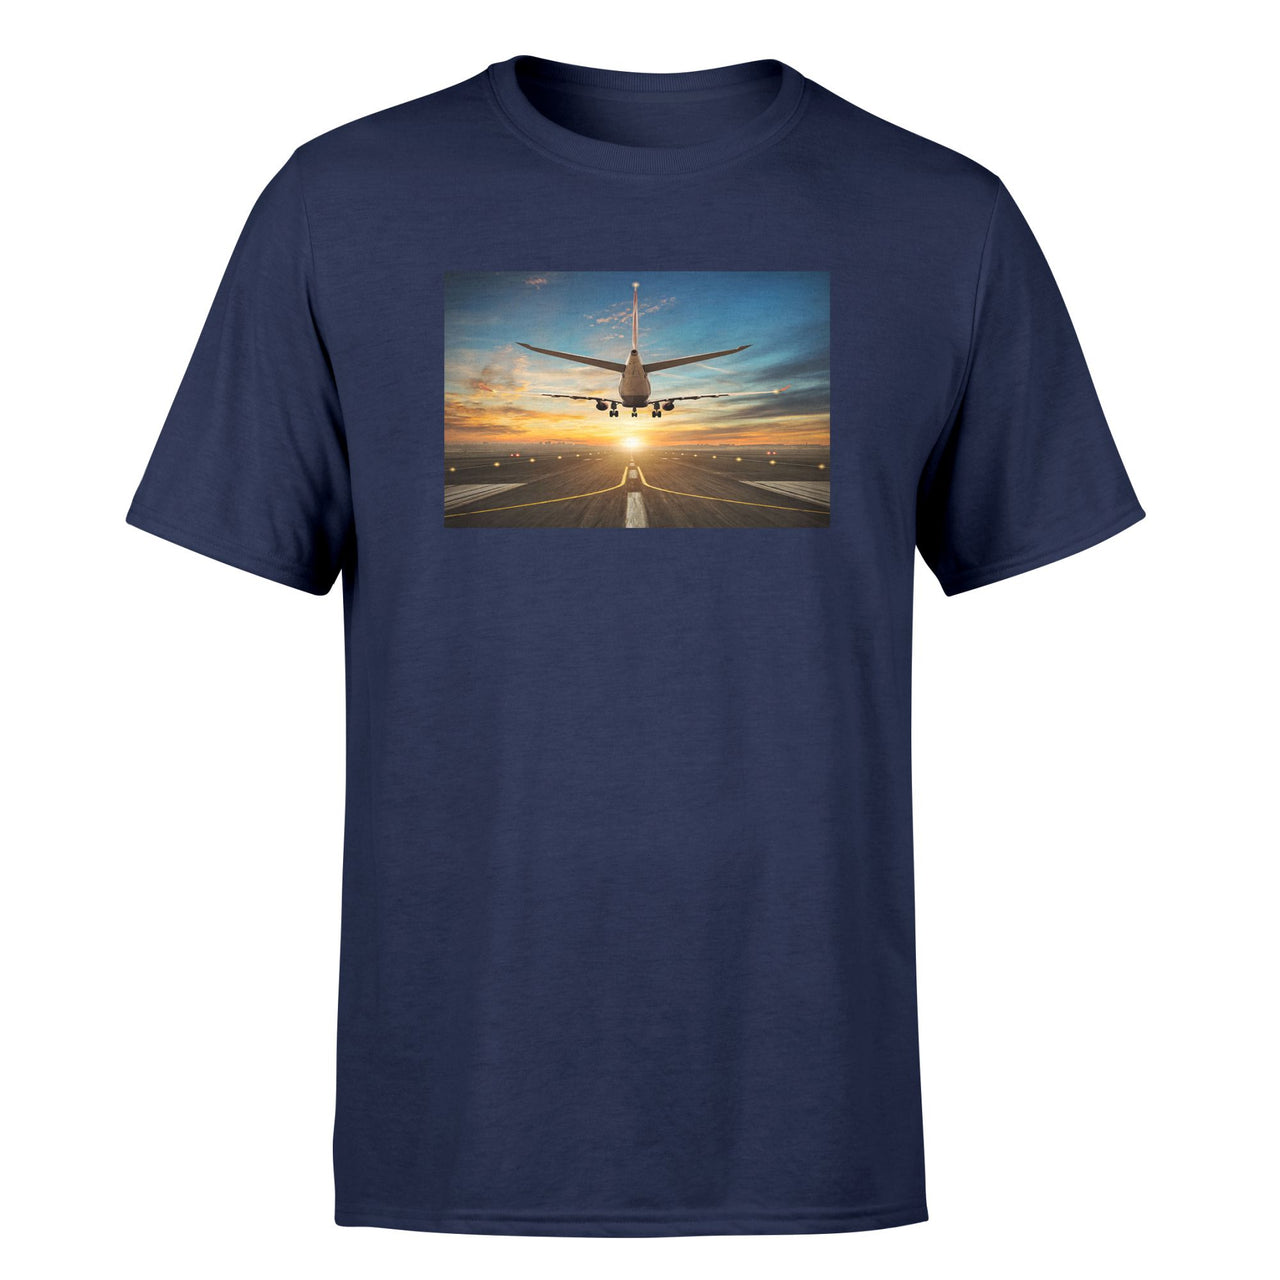 Airplane over Runway Towards the Sunrise Designed T-Shirts